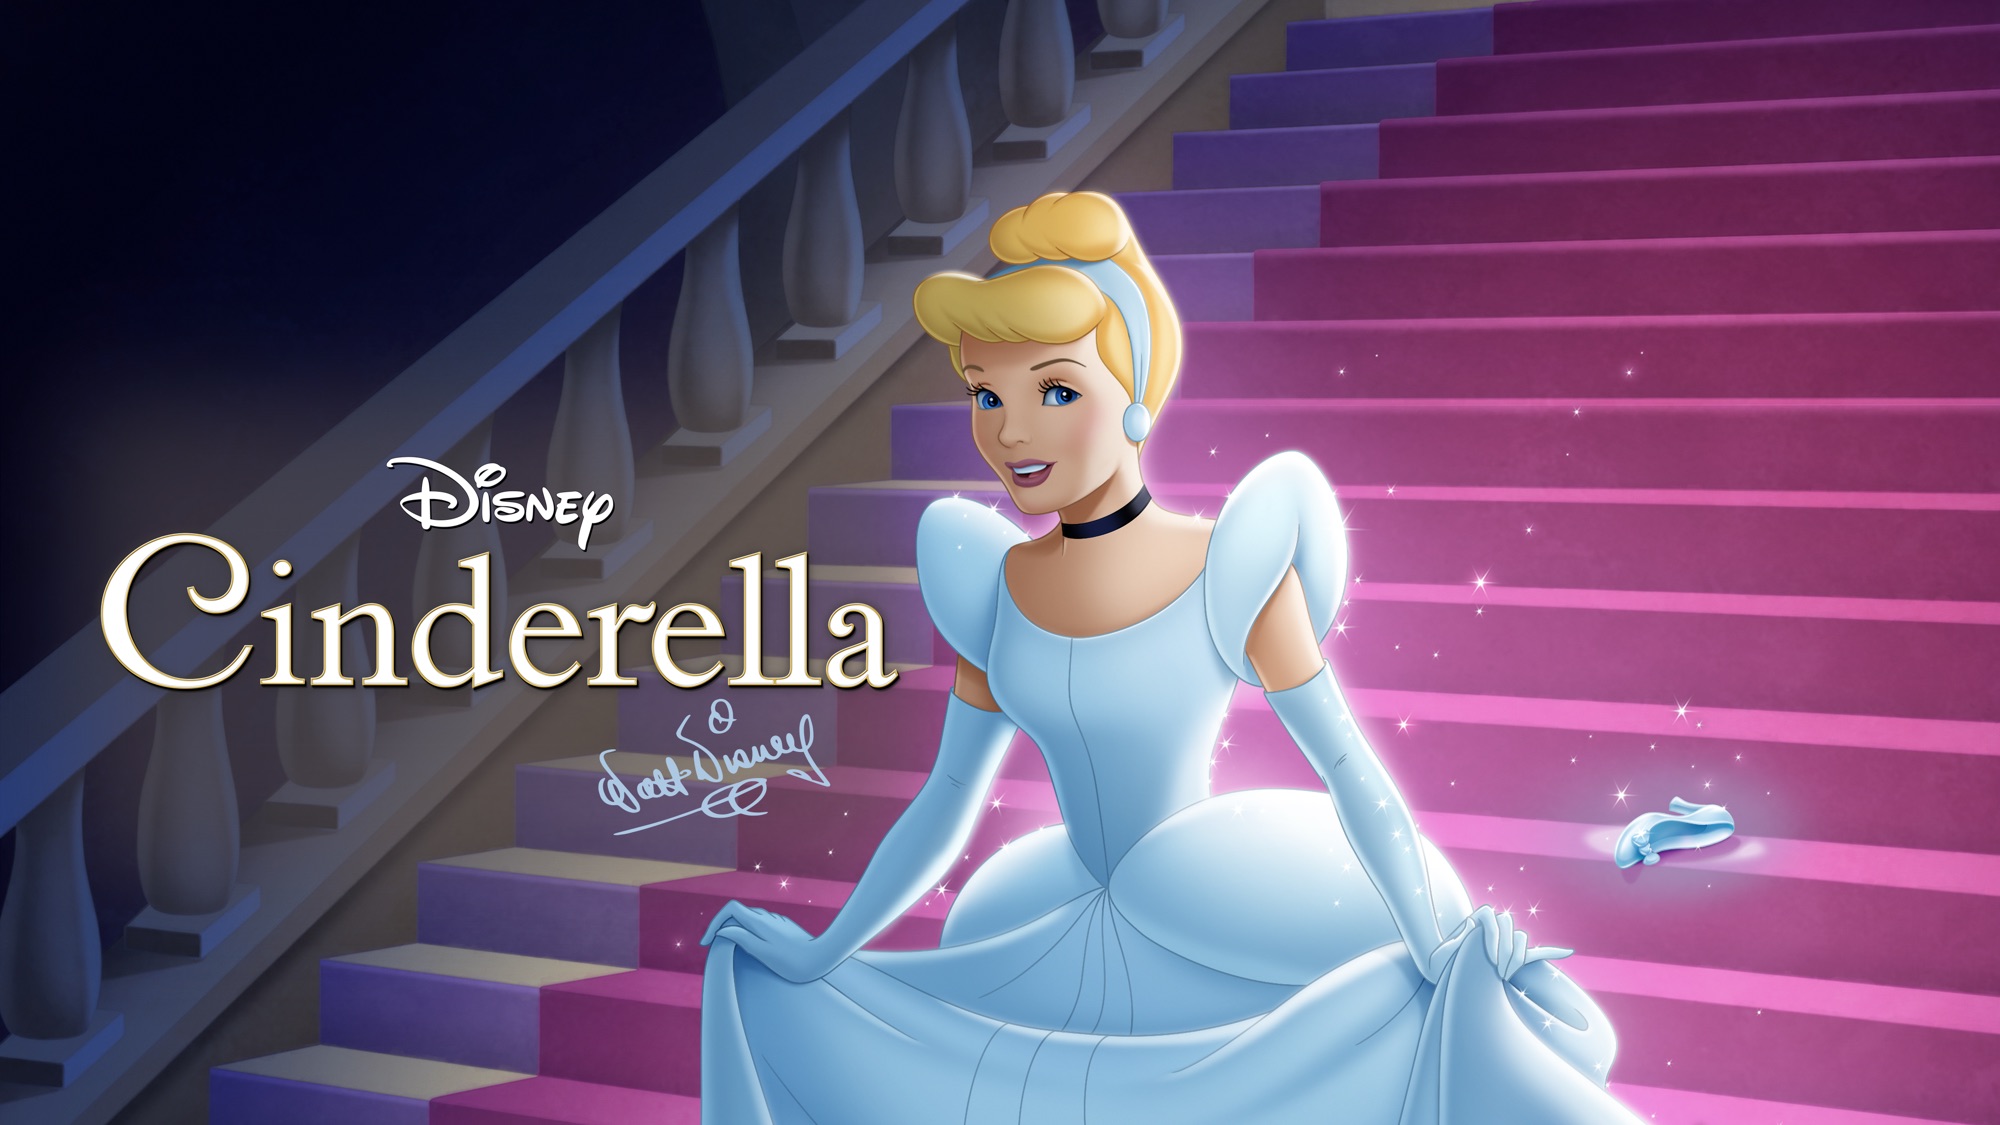 Movie Cinderella (1950) HD Wallpaper Background Image.